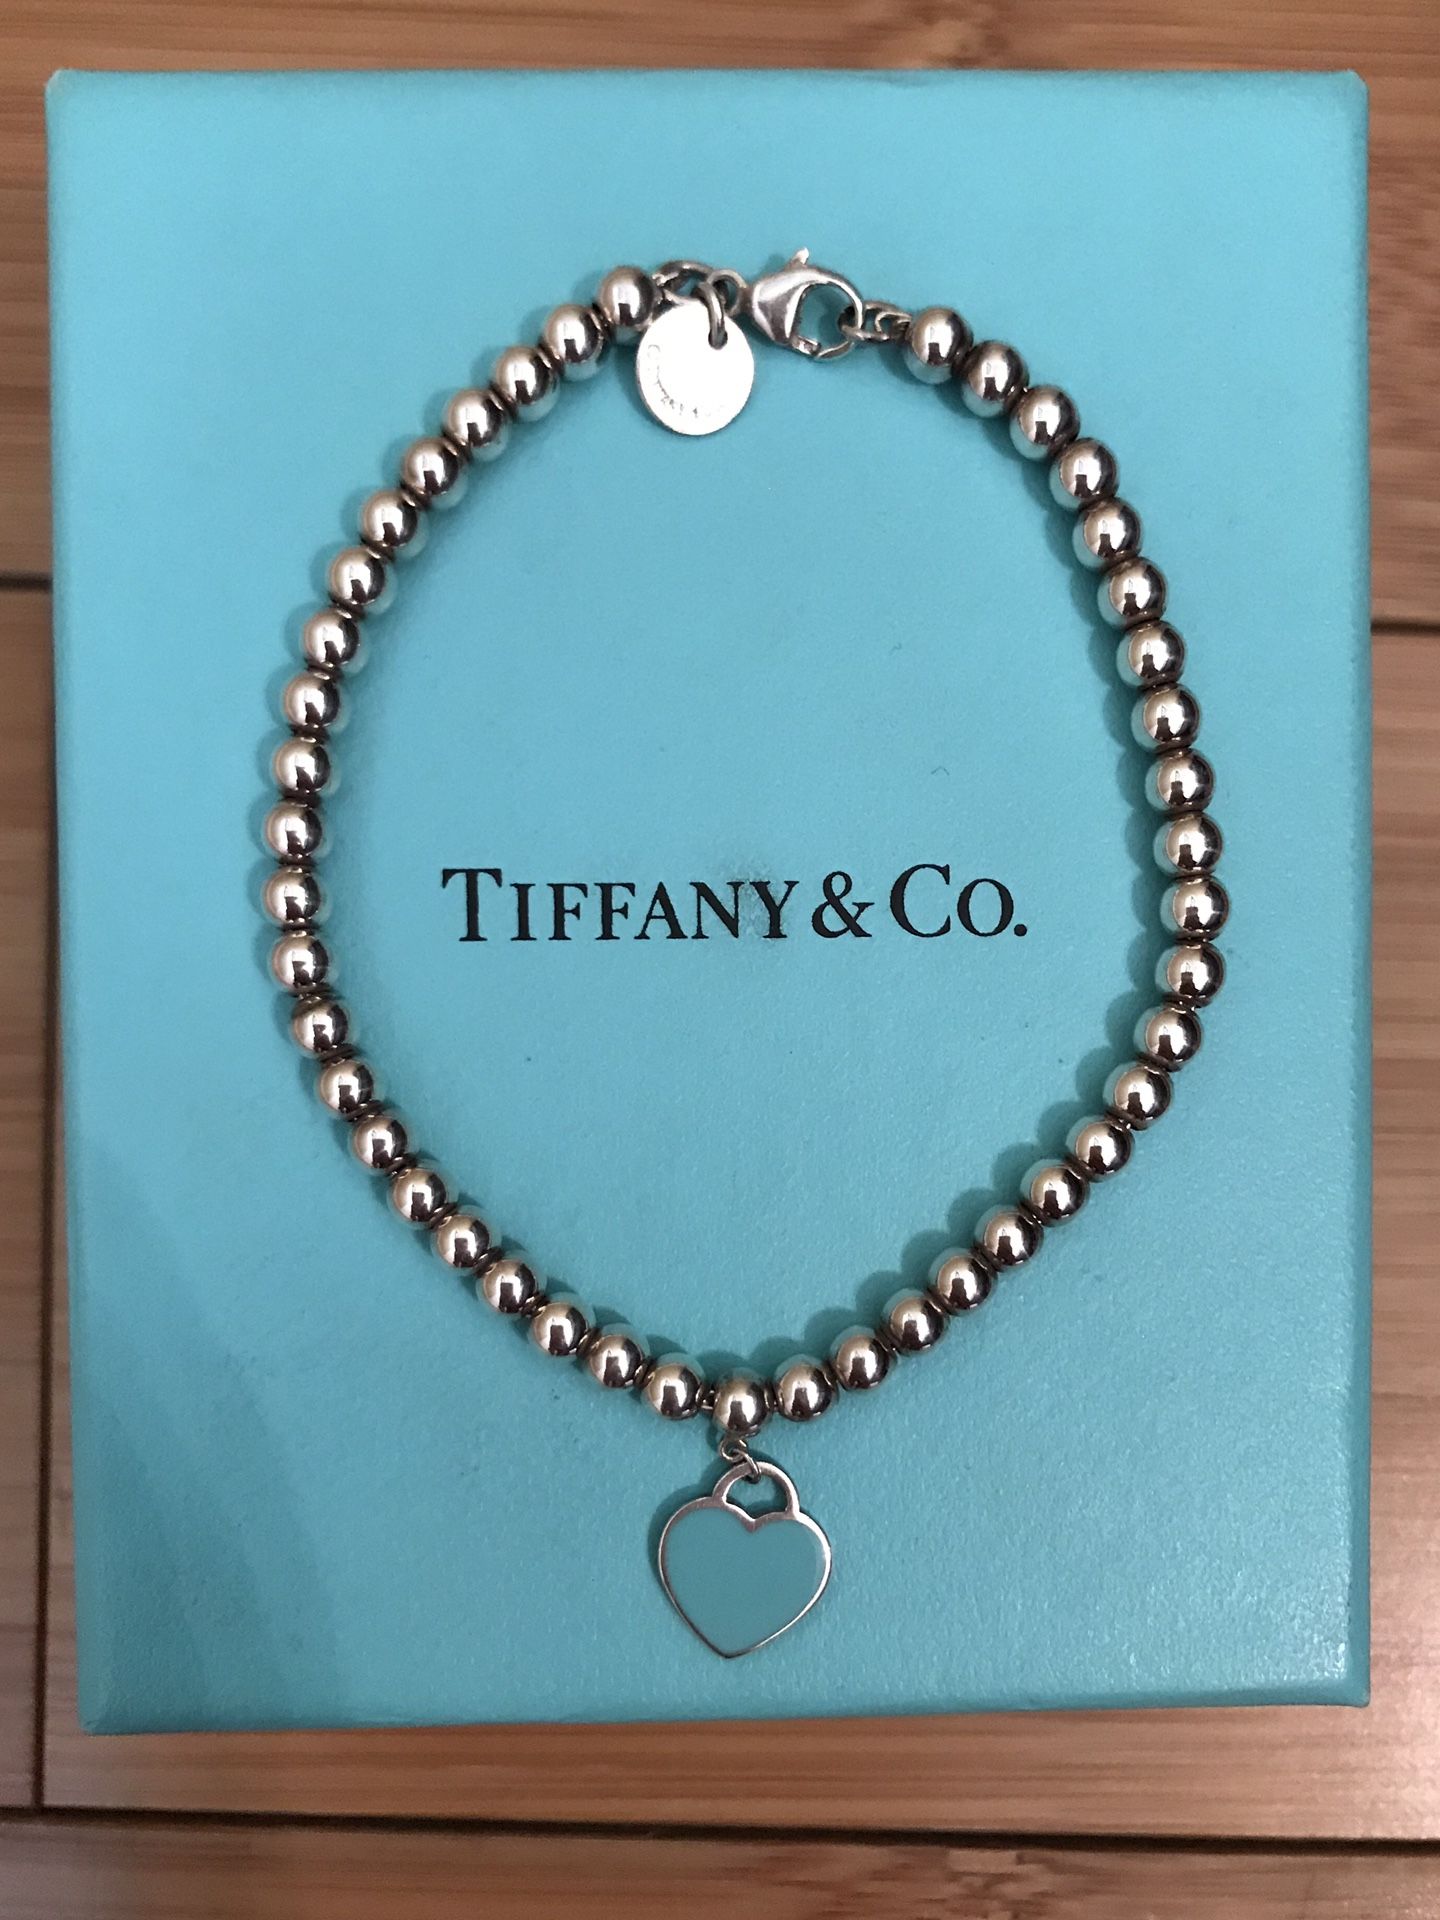 Tiffany & Co. Sterling silver bracelet